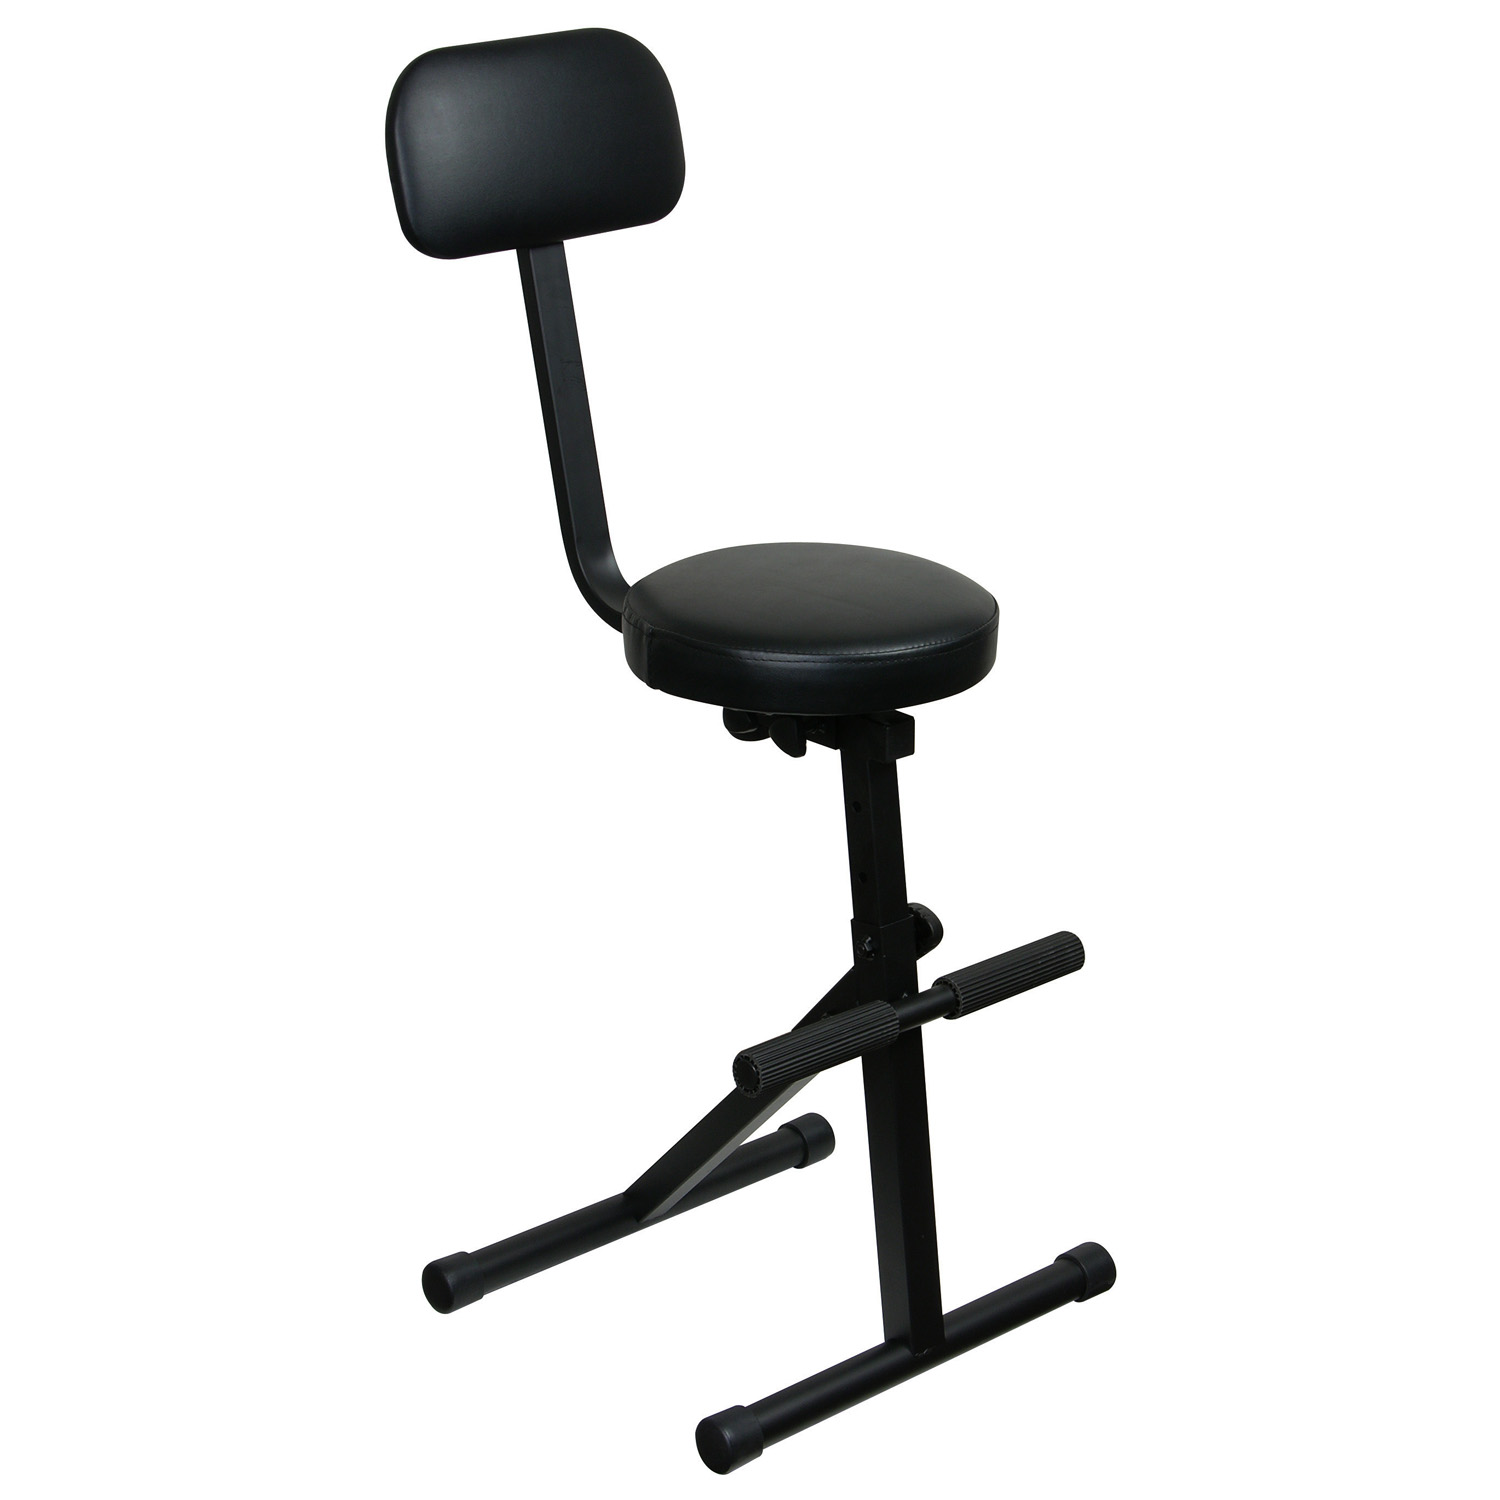 Black adjustable dj chair